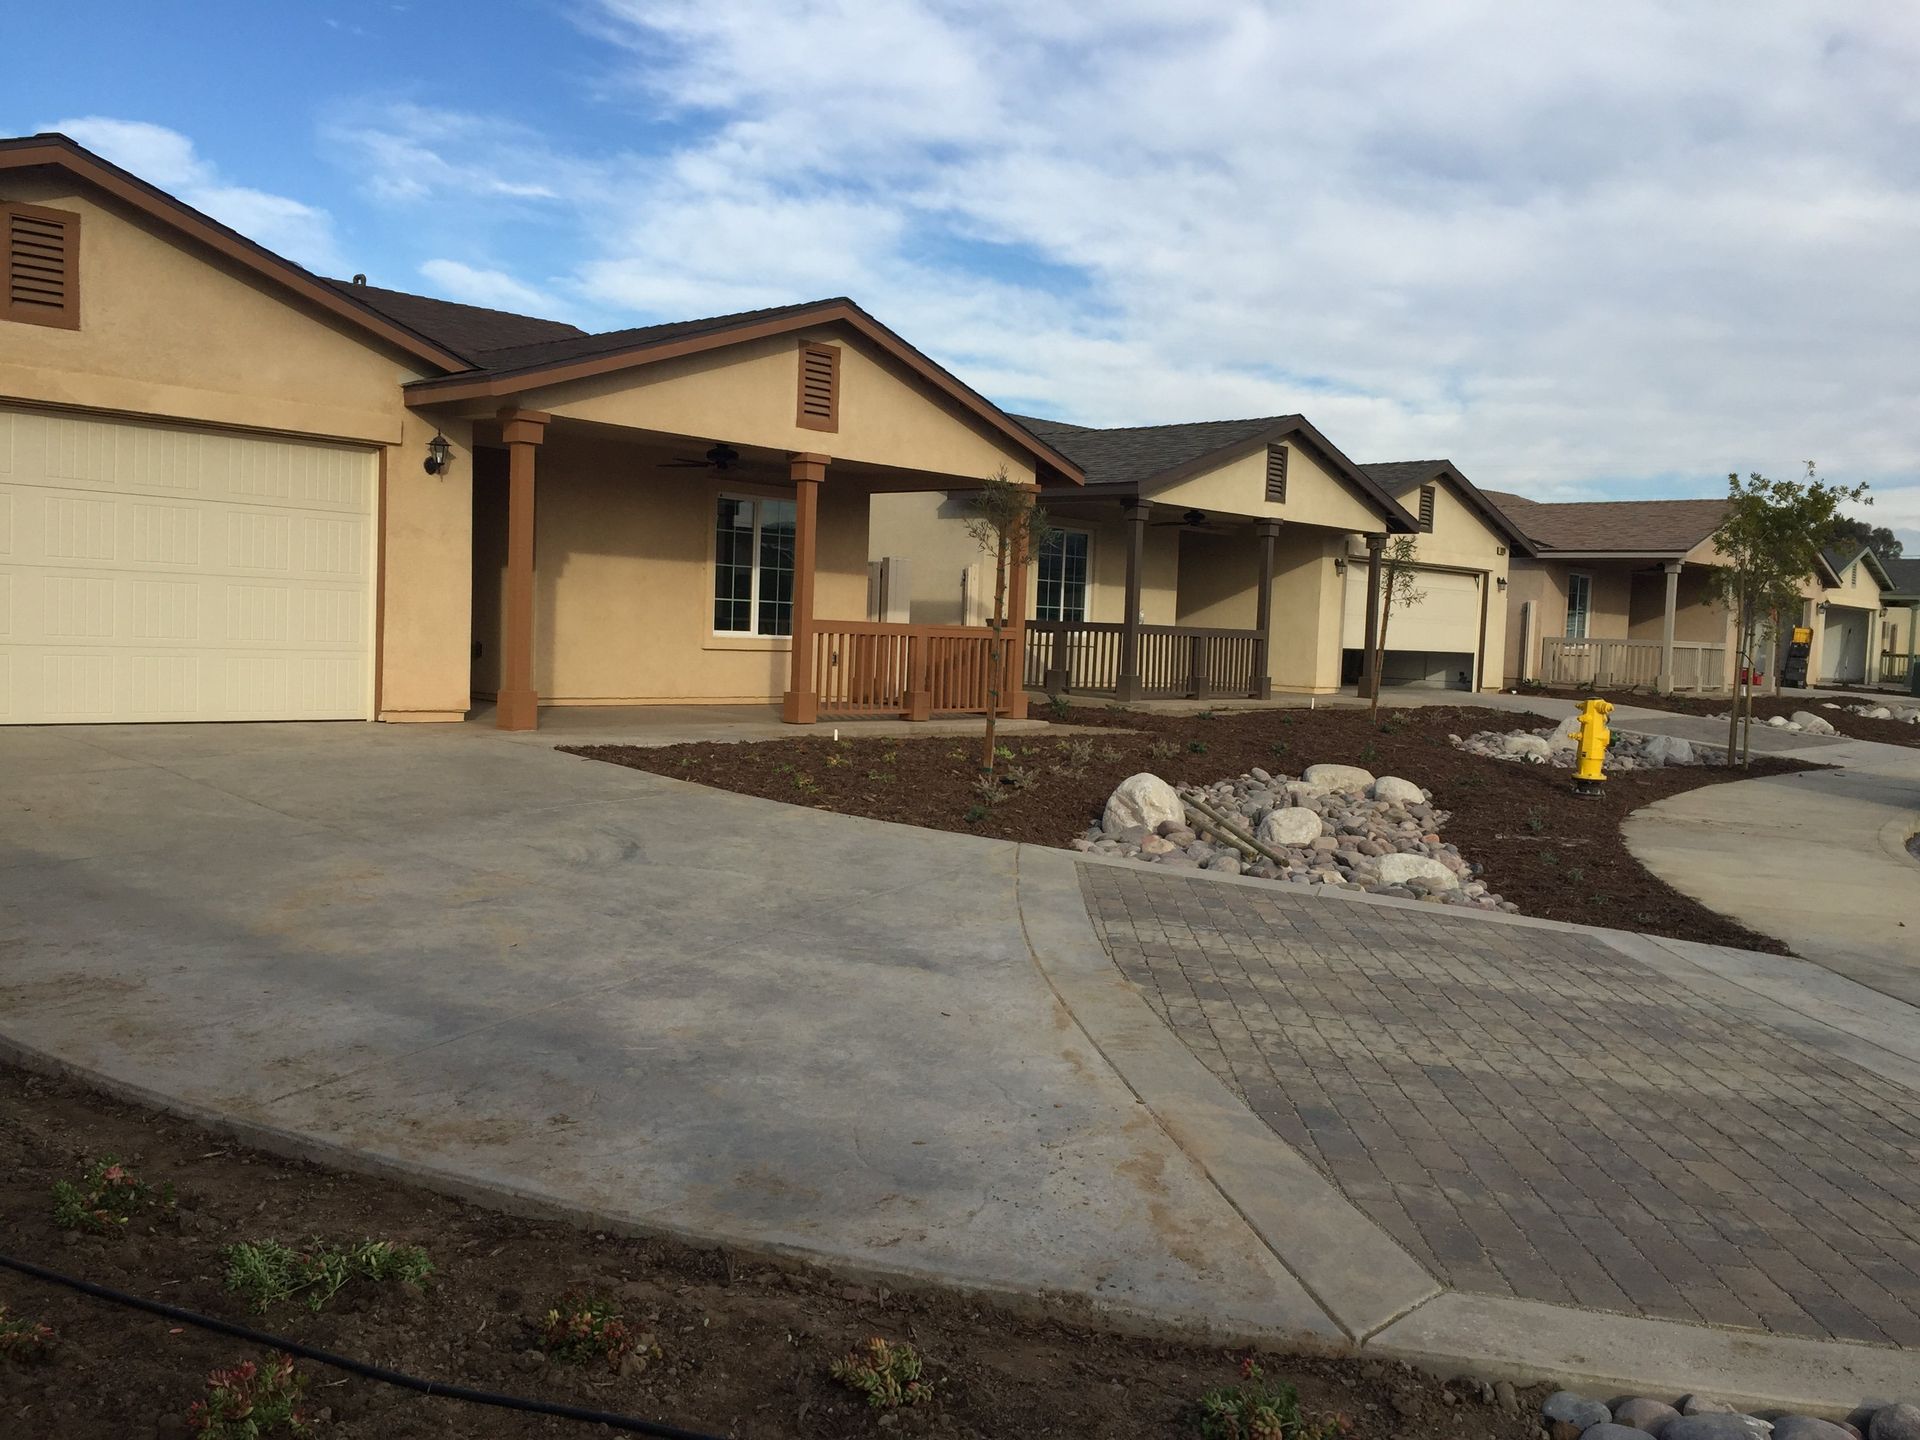 Habitat for Humanity Riverside building safe, decent, and affordable homes in Moreno Valley